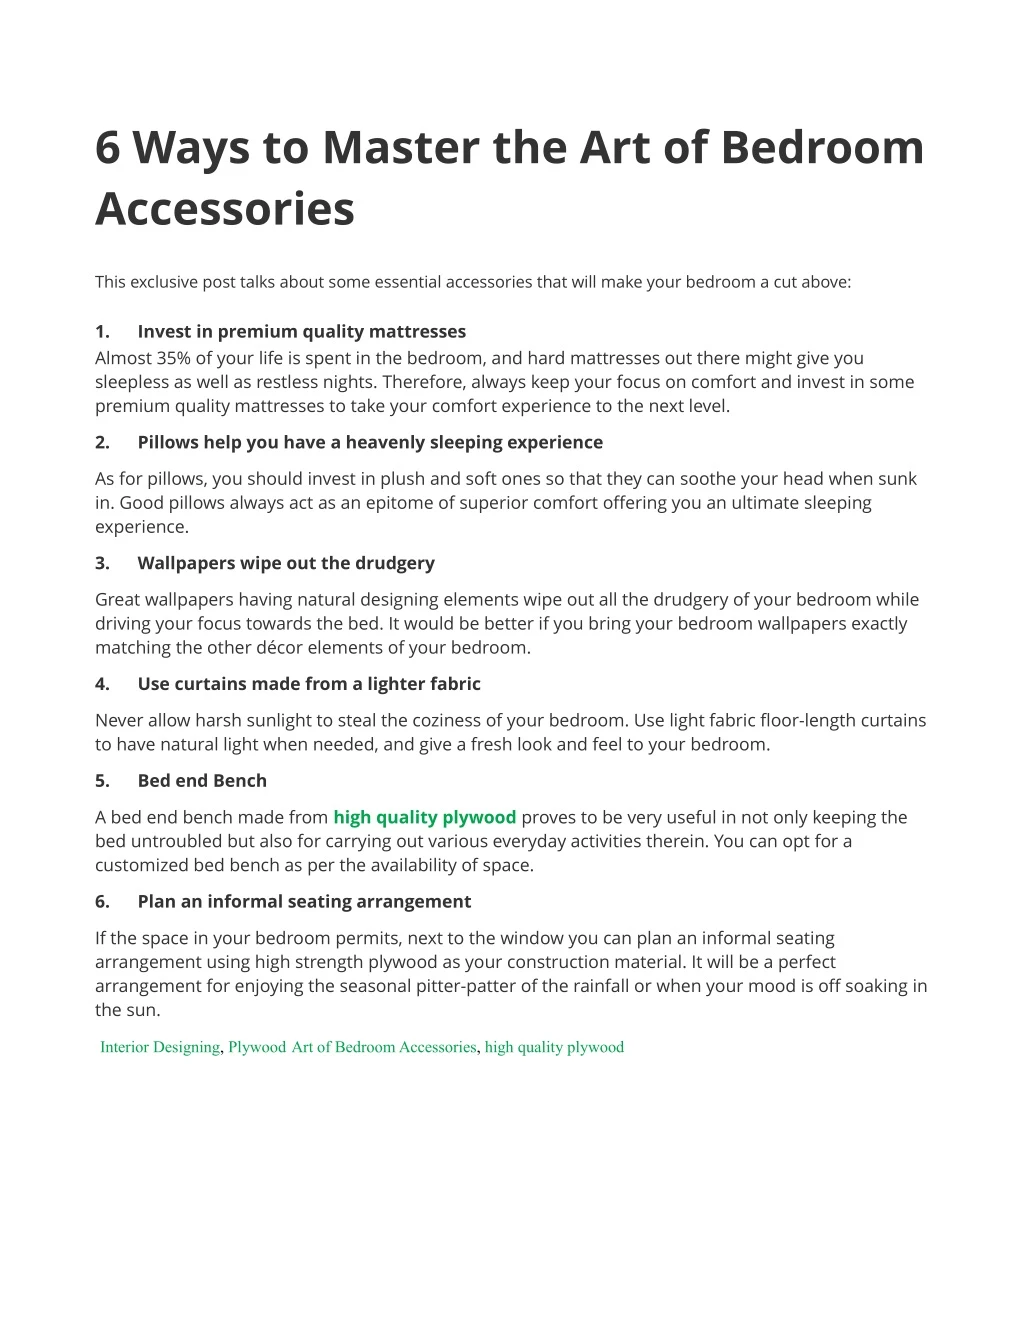 6 ways to master the art of bedroom accessories